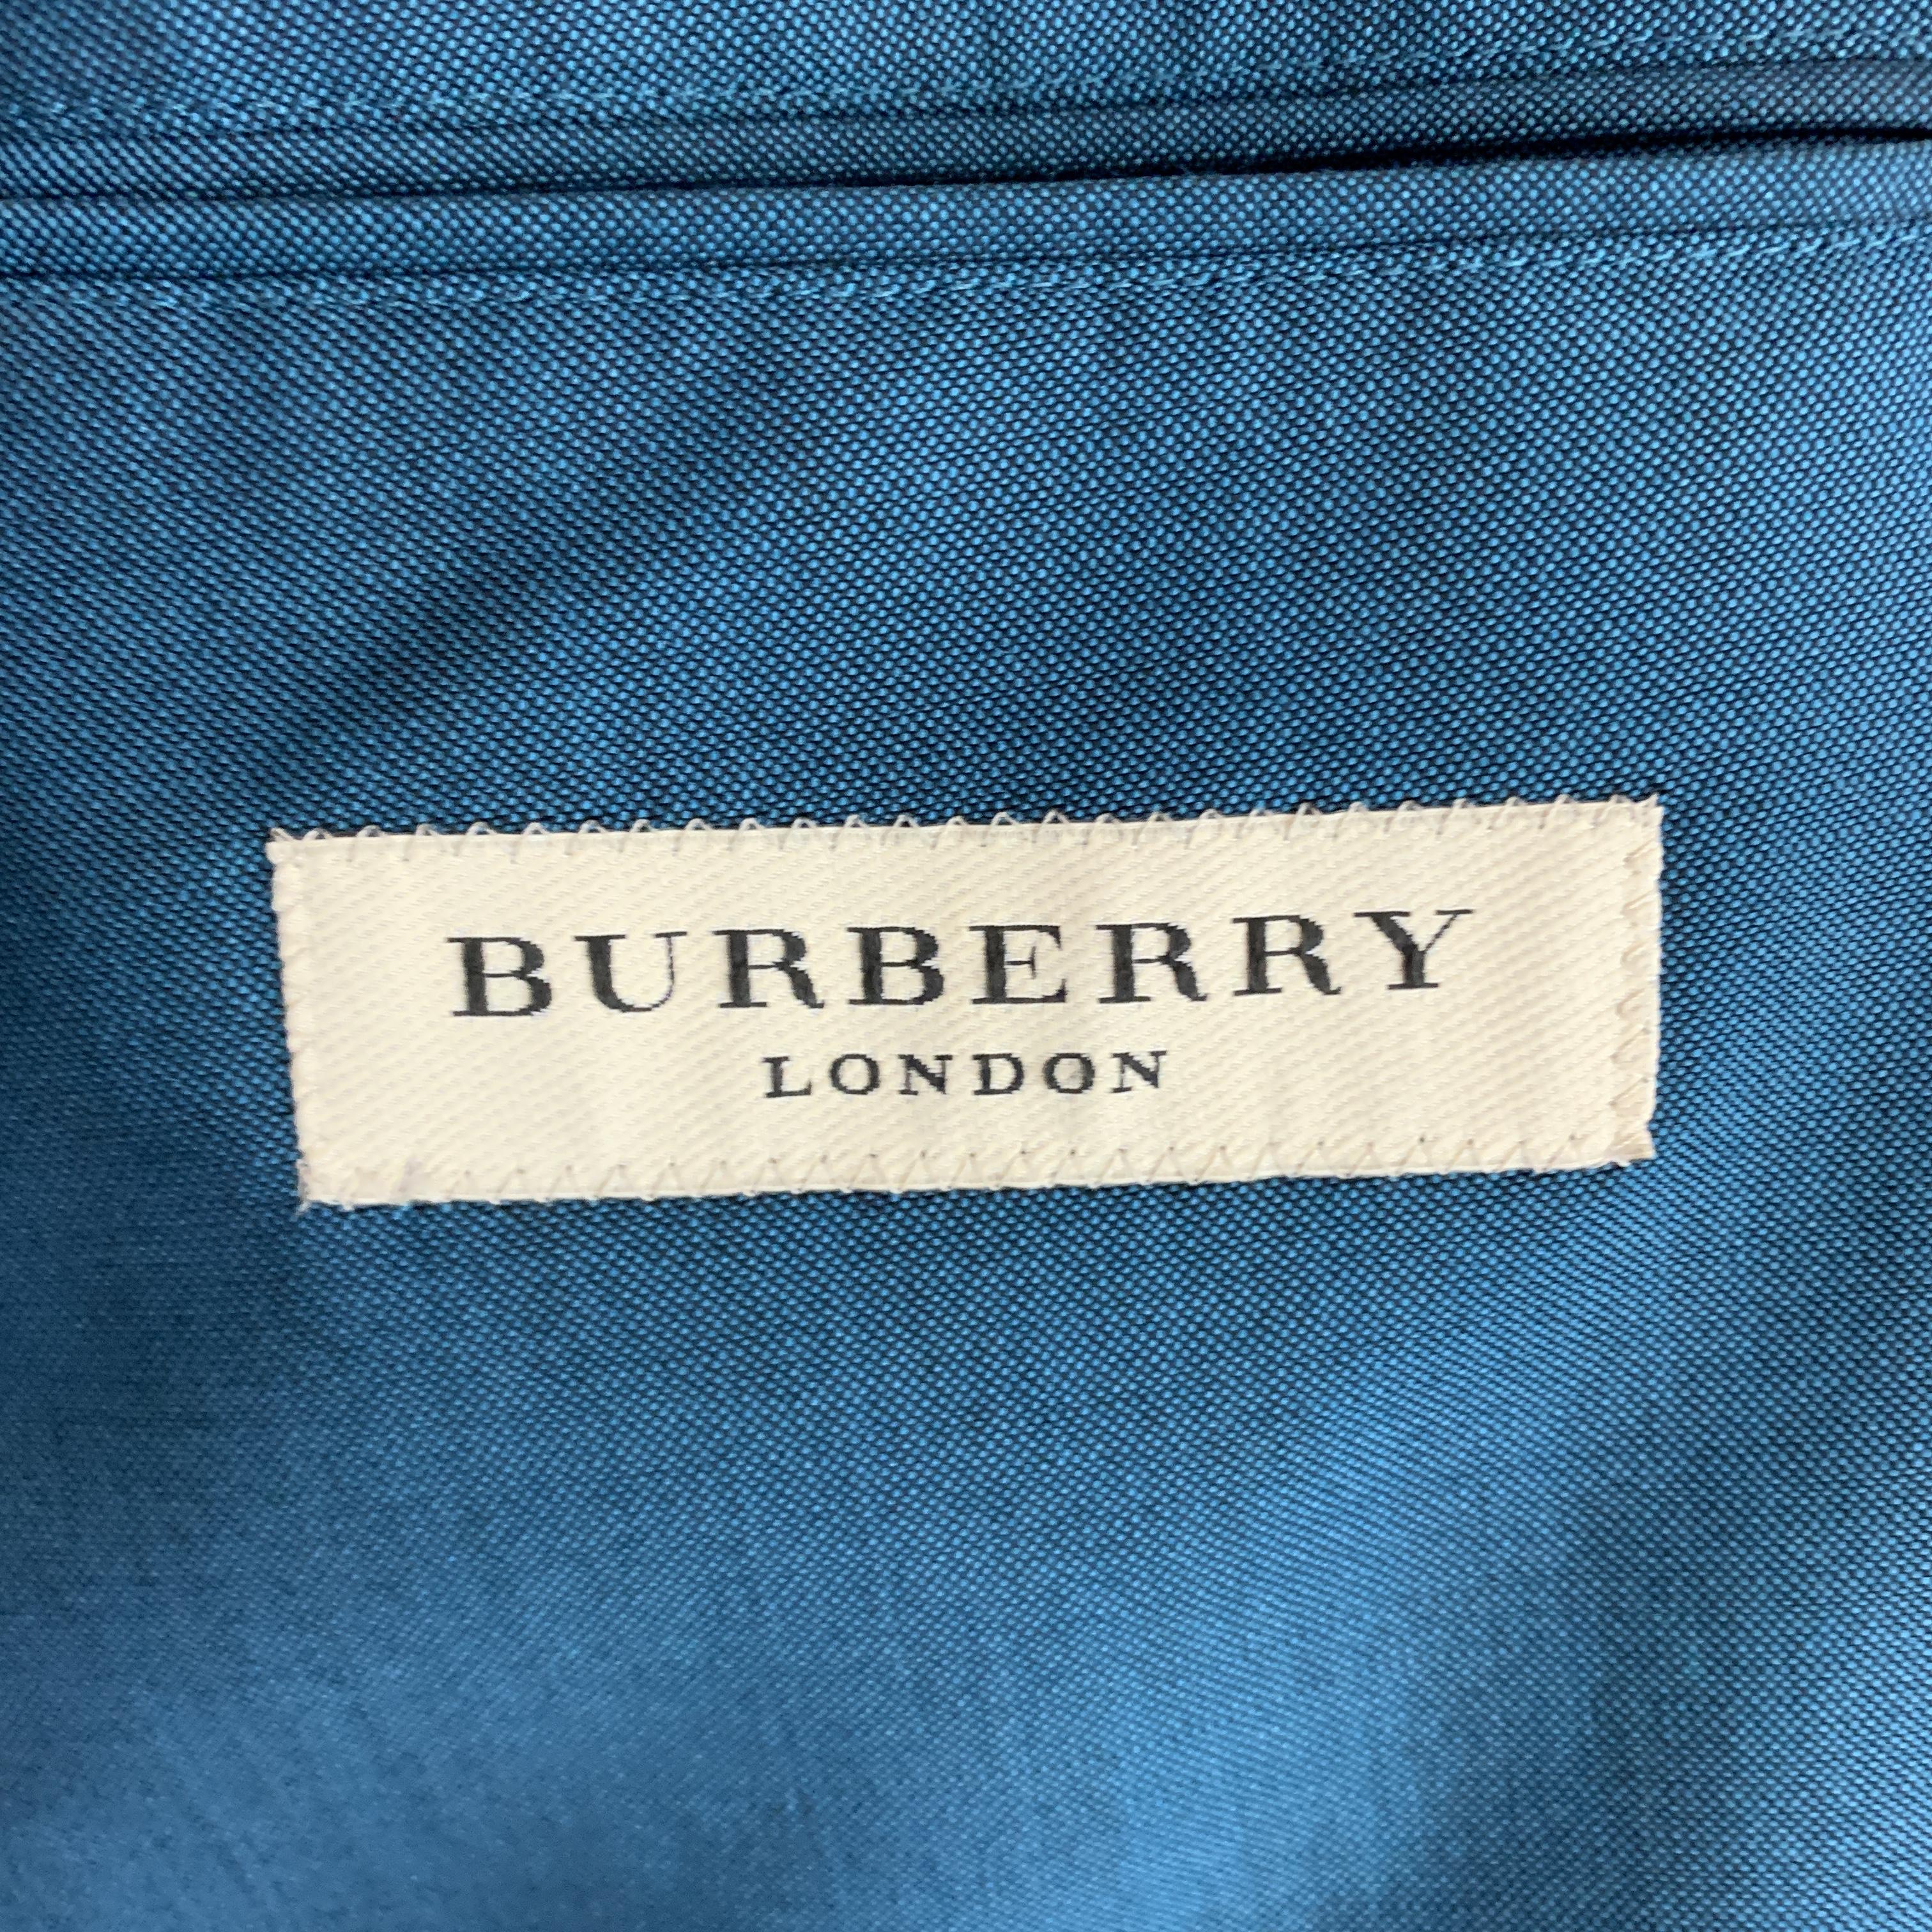 BURBERRY LONDON Size 42 Teal Sharkskin Wool / Mohair Notch Lapel Pants Suit 2